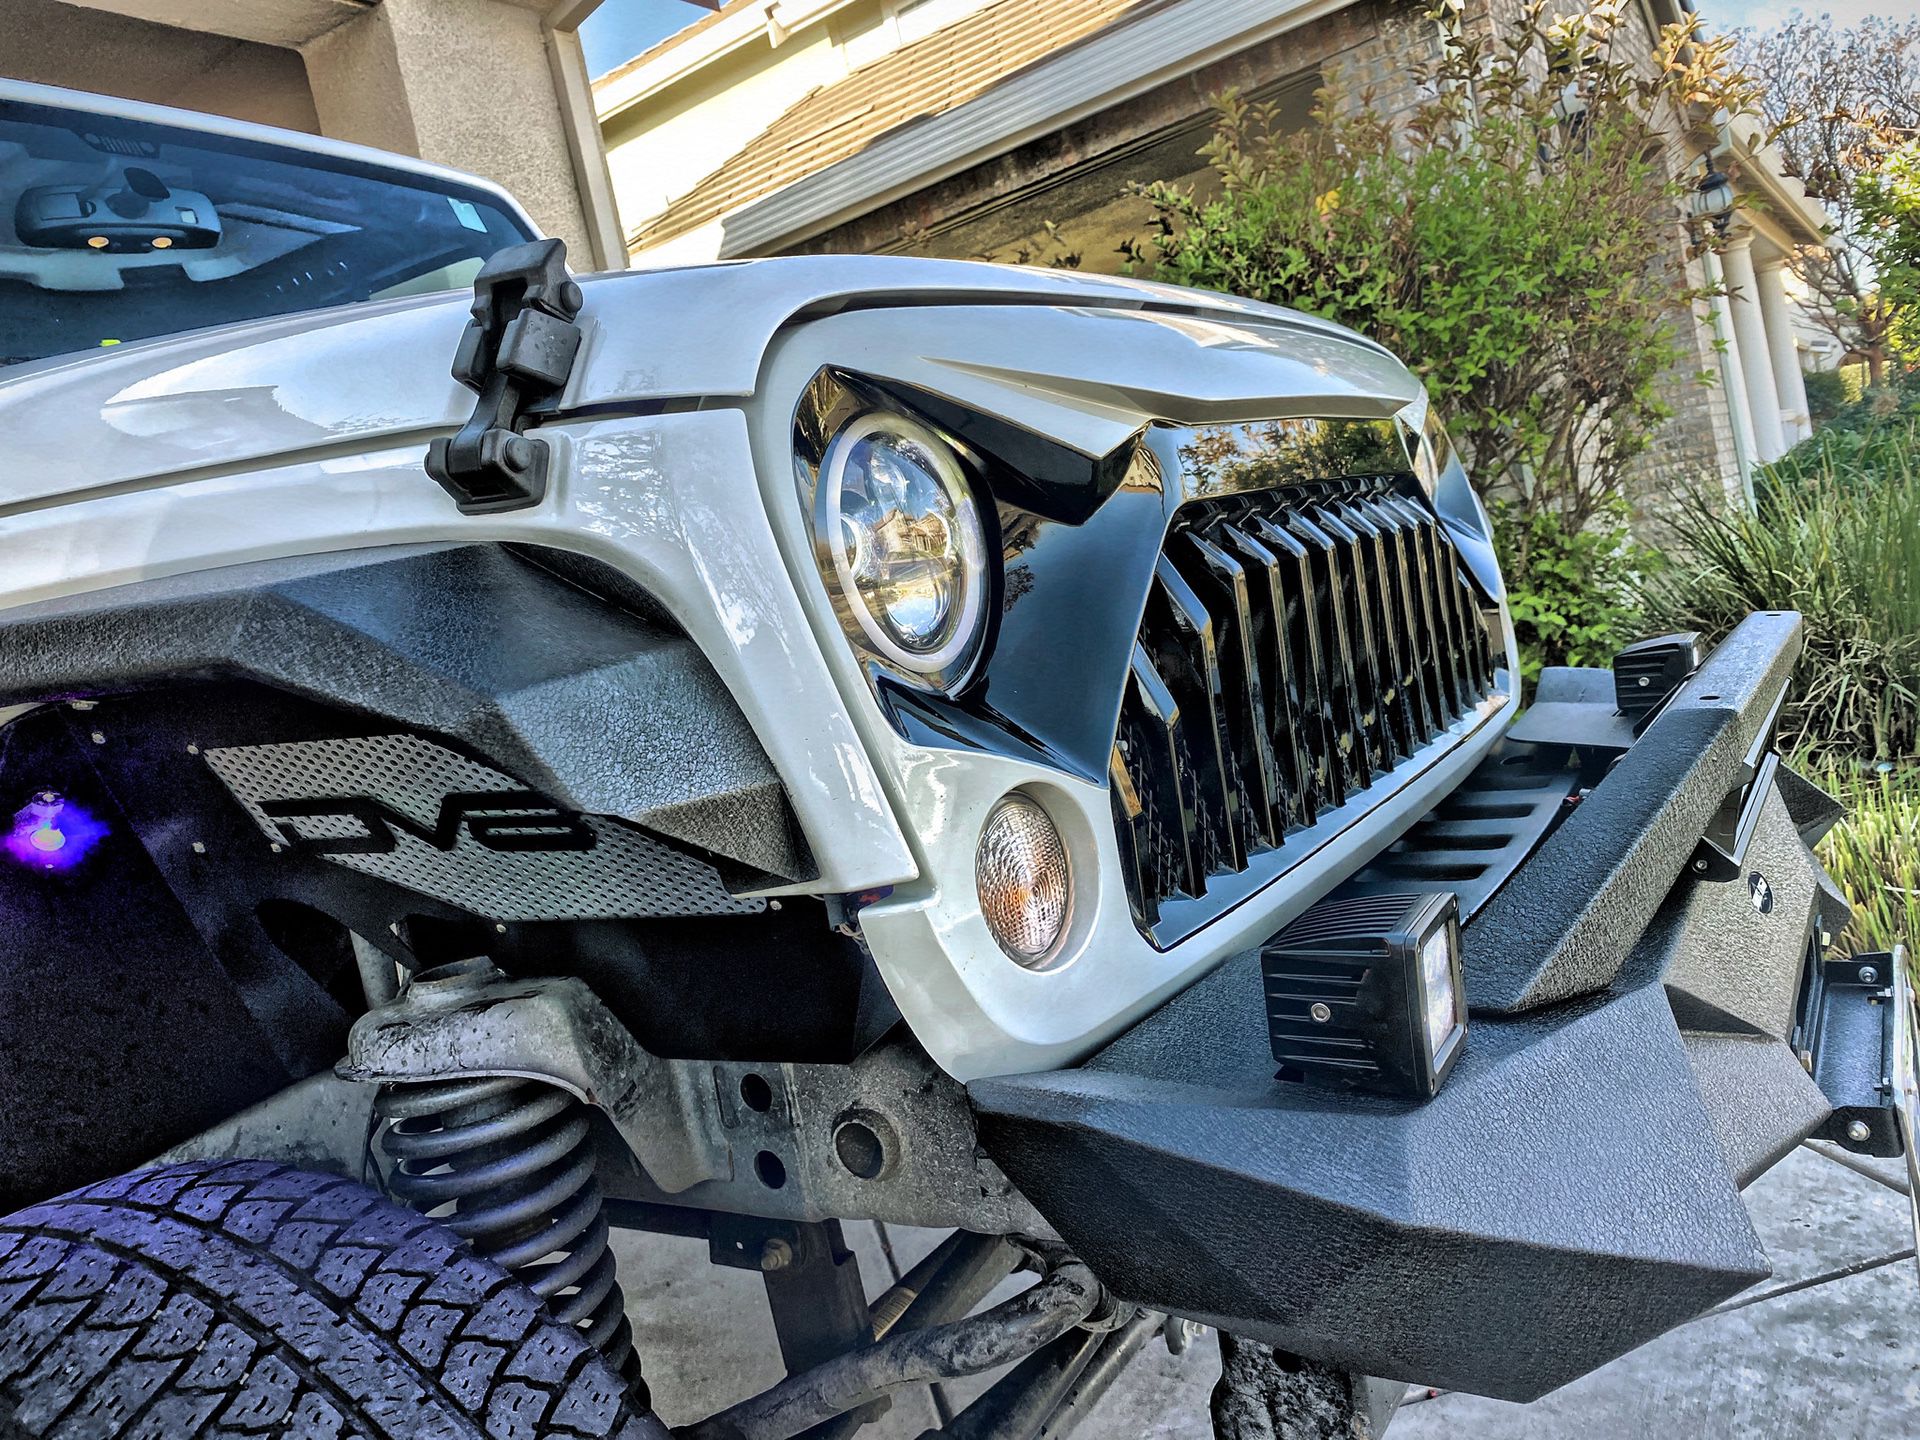 Jeep parts